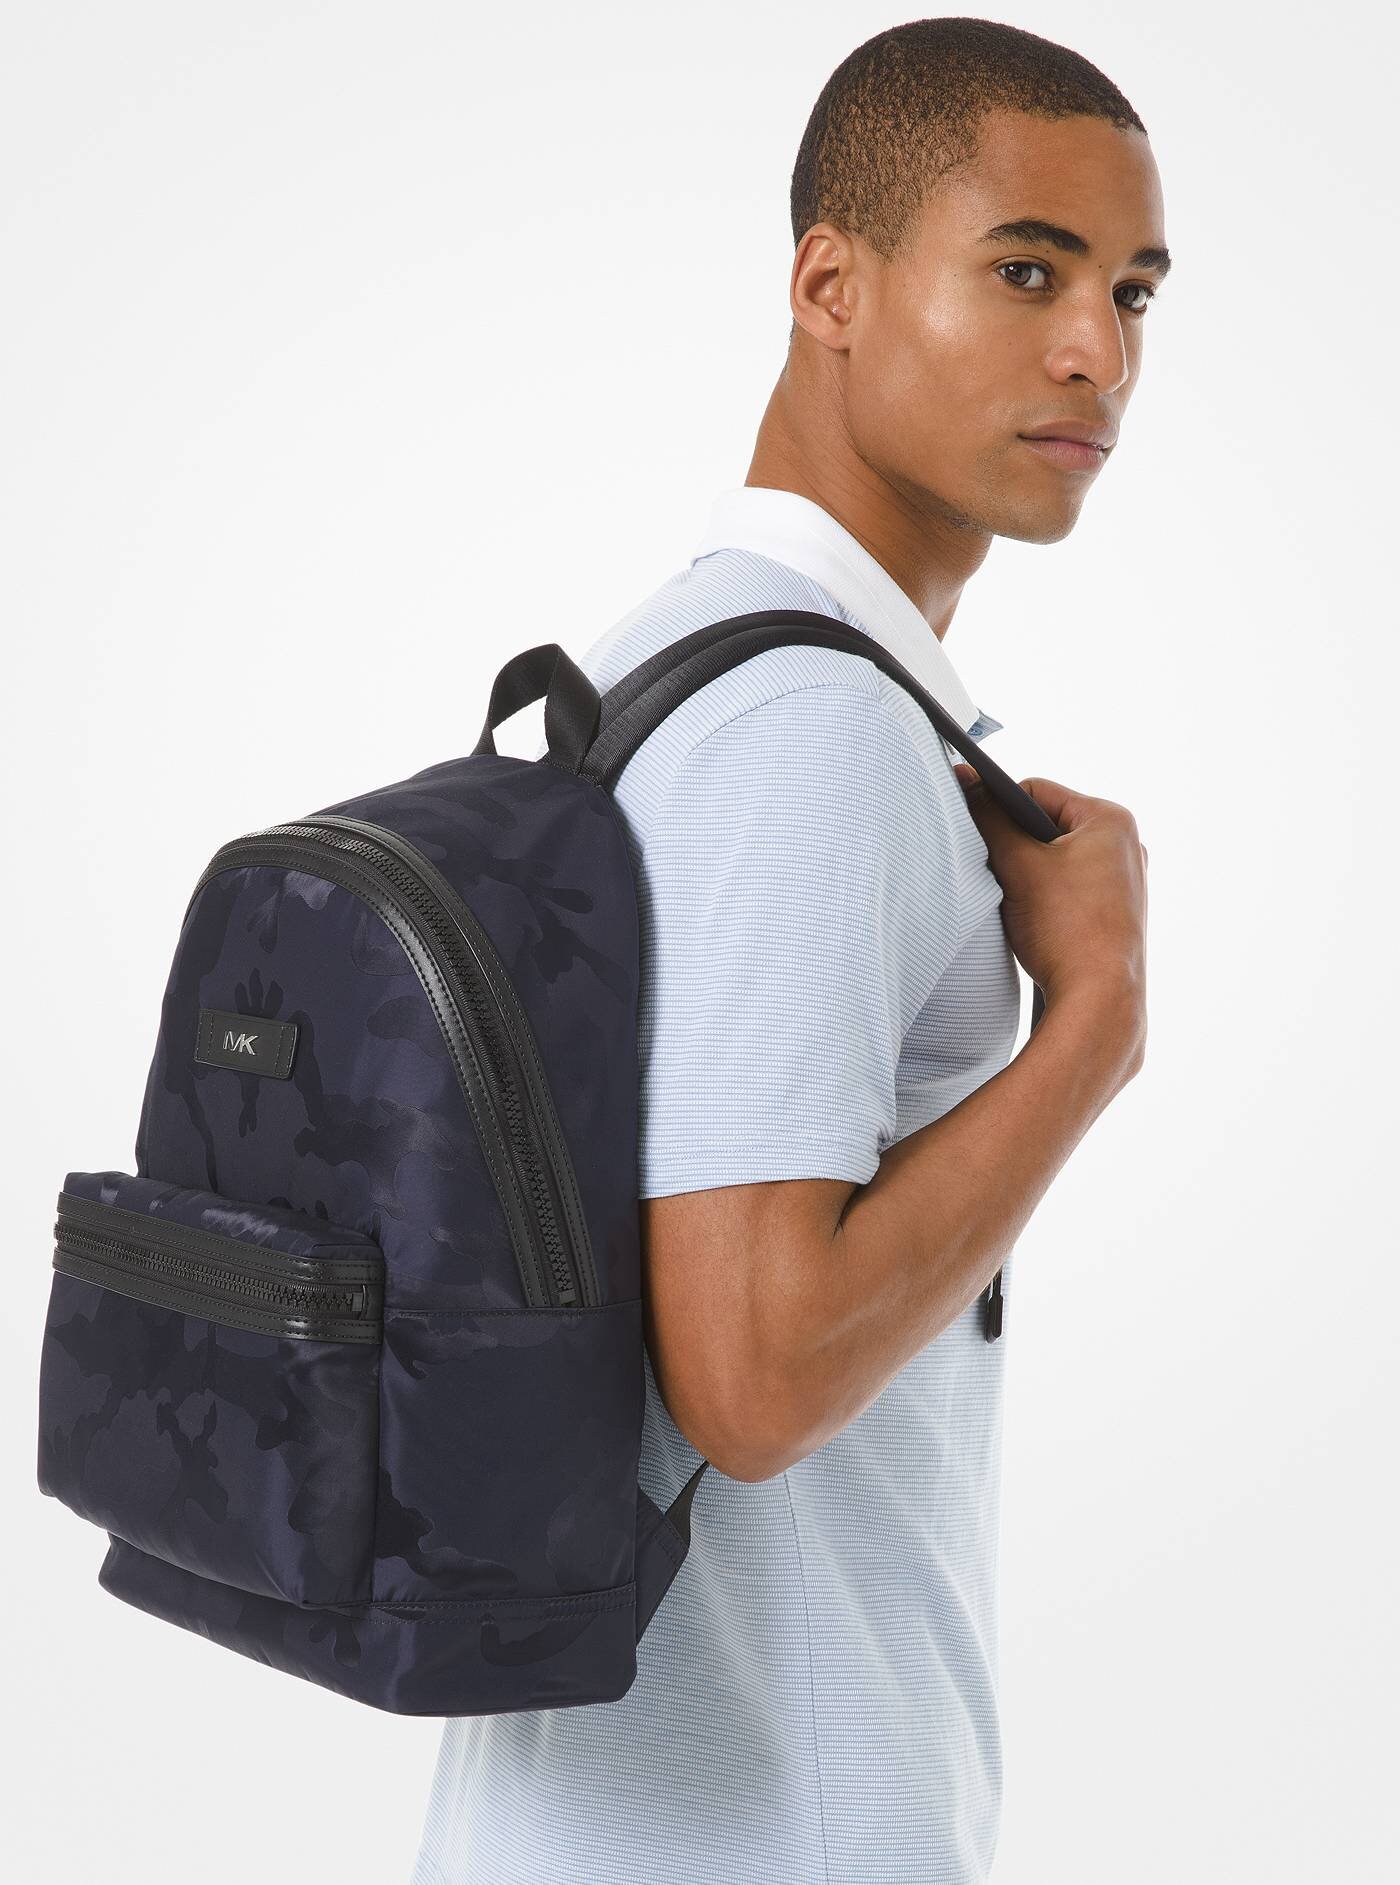 michael kors mens backpack camo